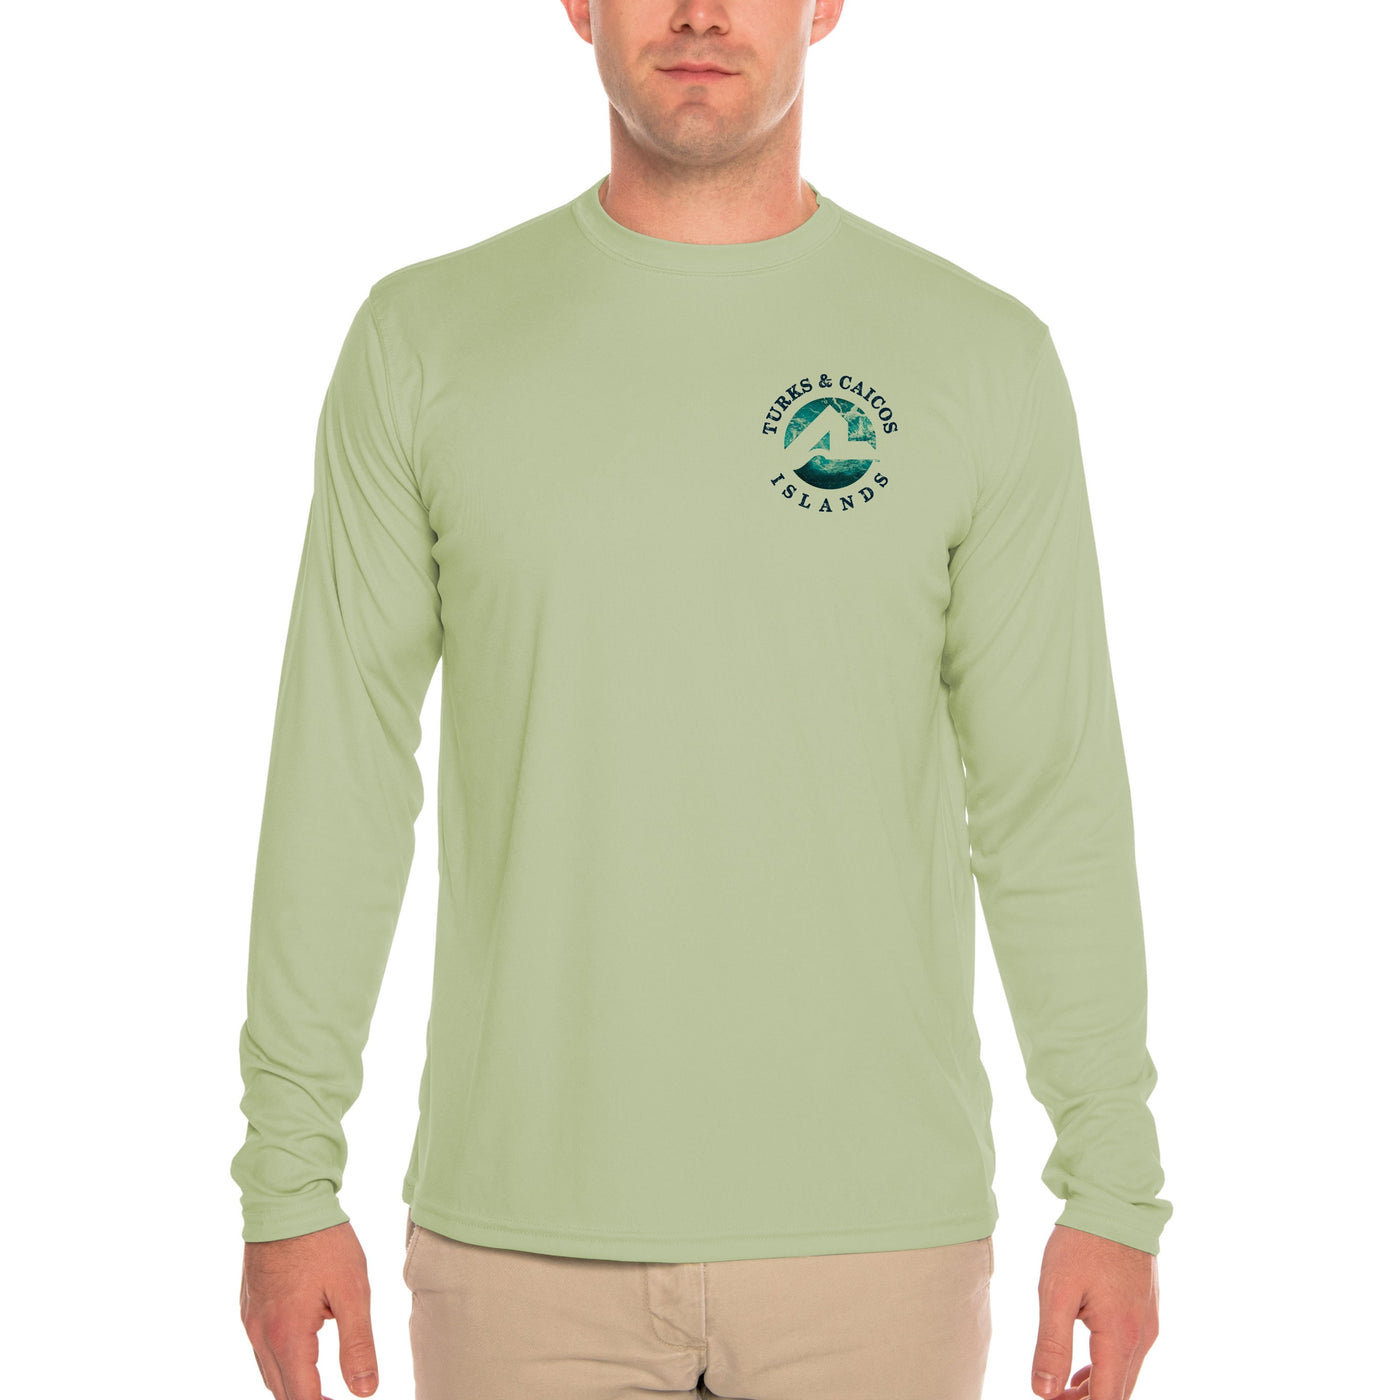 Fish Charts Turks & Caicos Men's UPF 50+ Long Sleeve T-Shirt